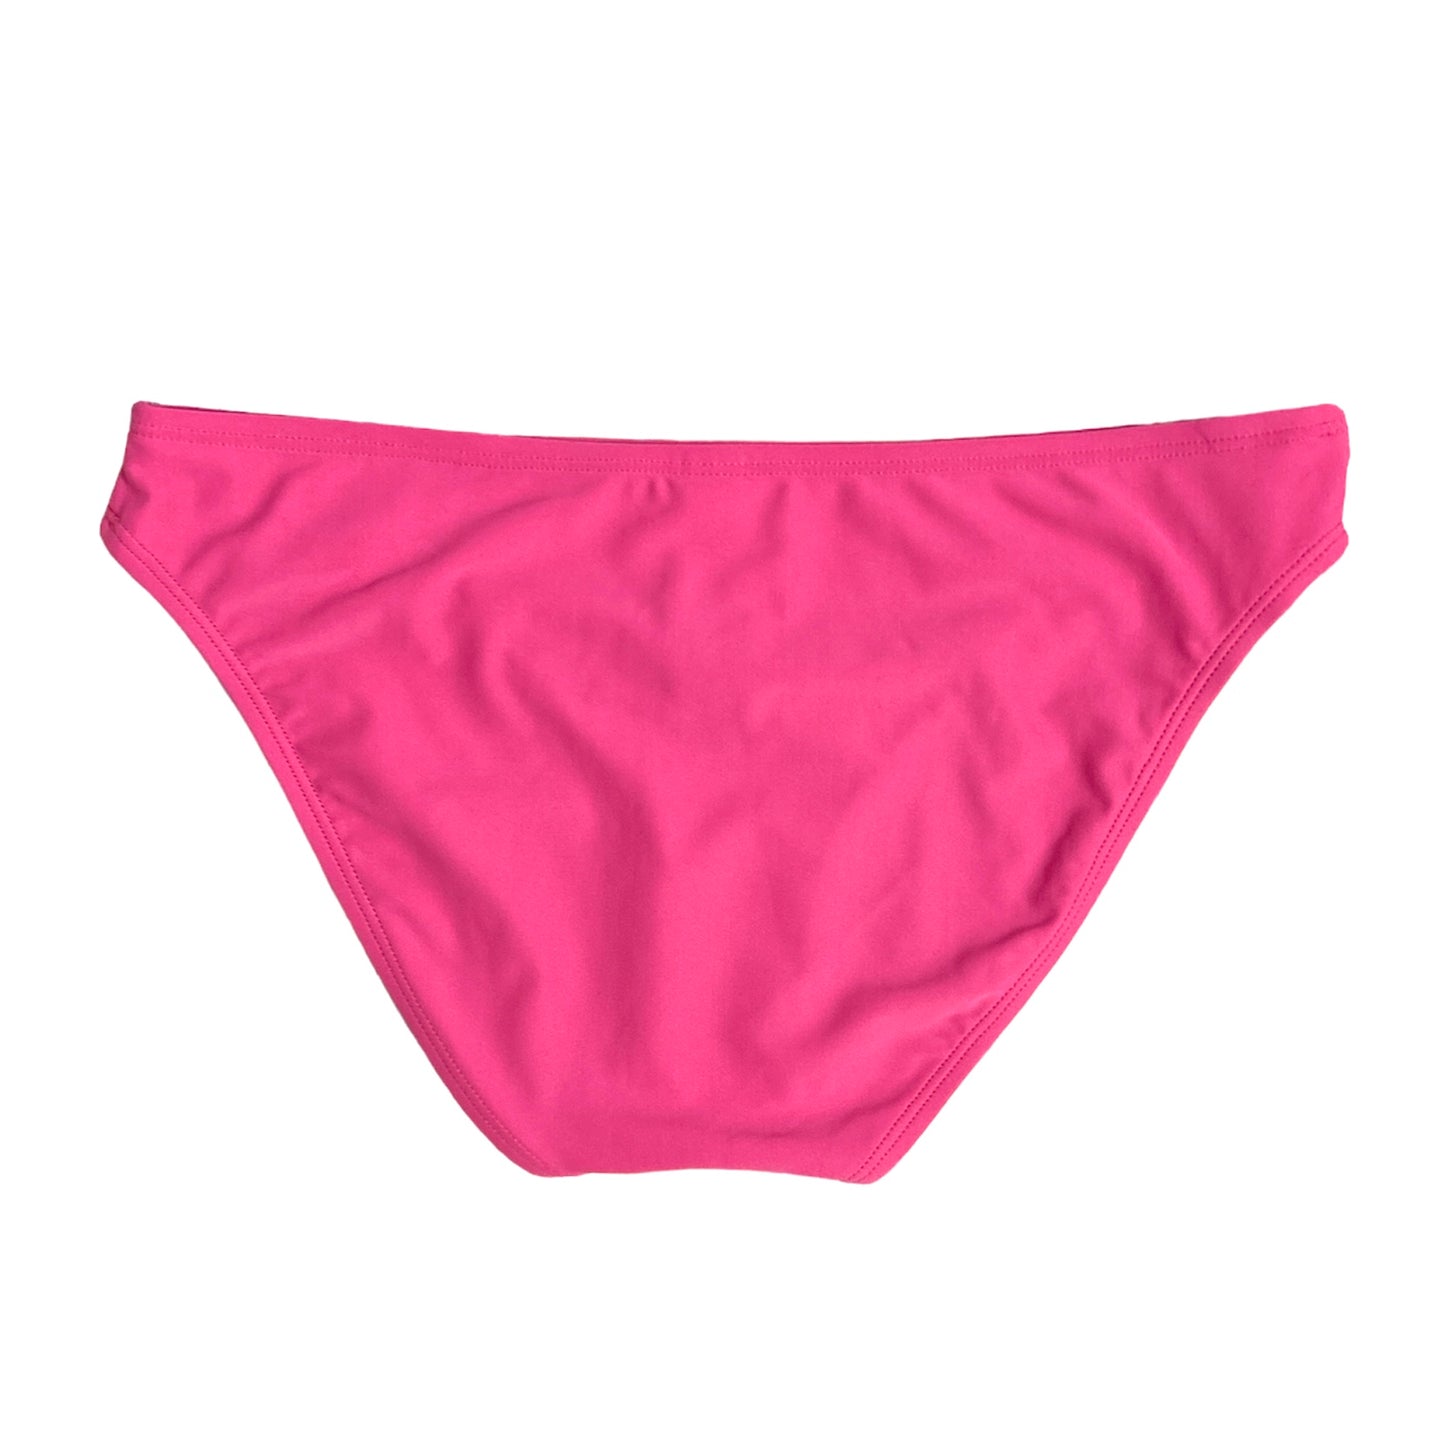 Pink Solid Bikini Bottoms Size M Women's Swimwear